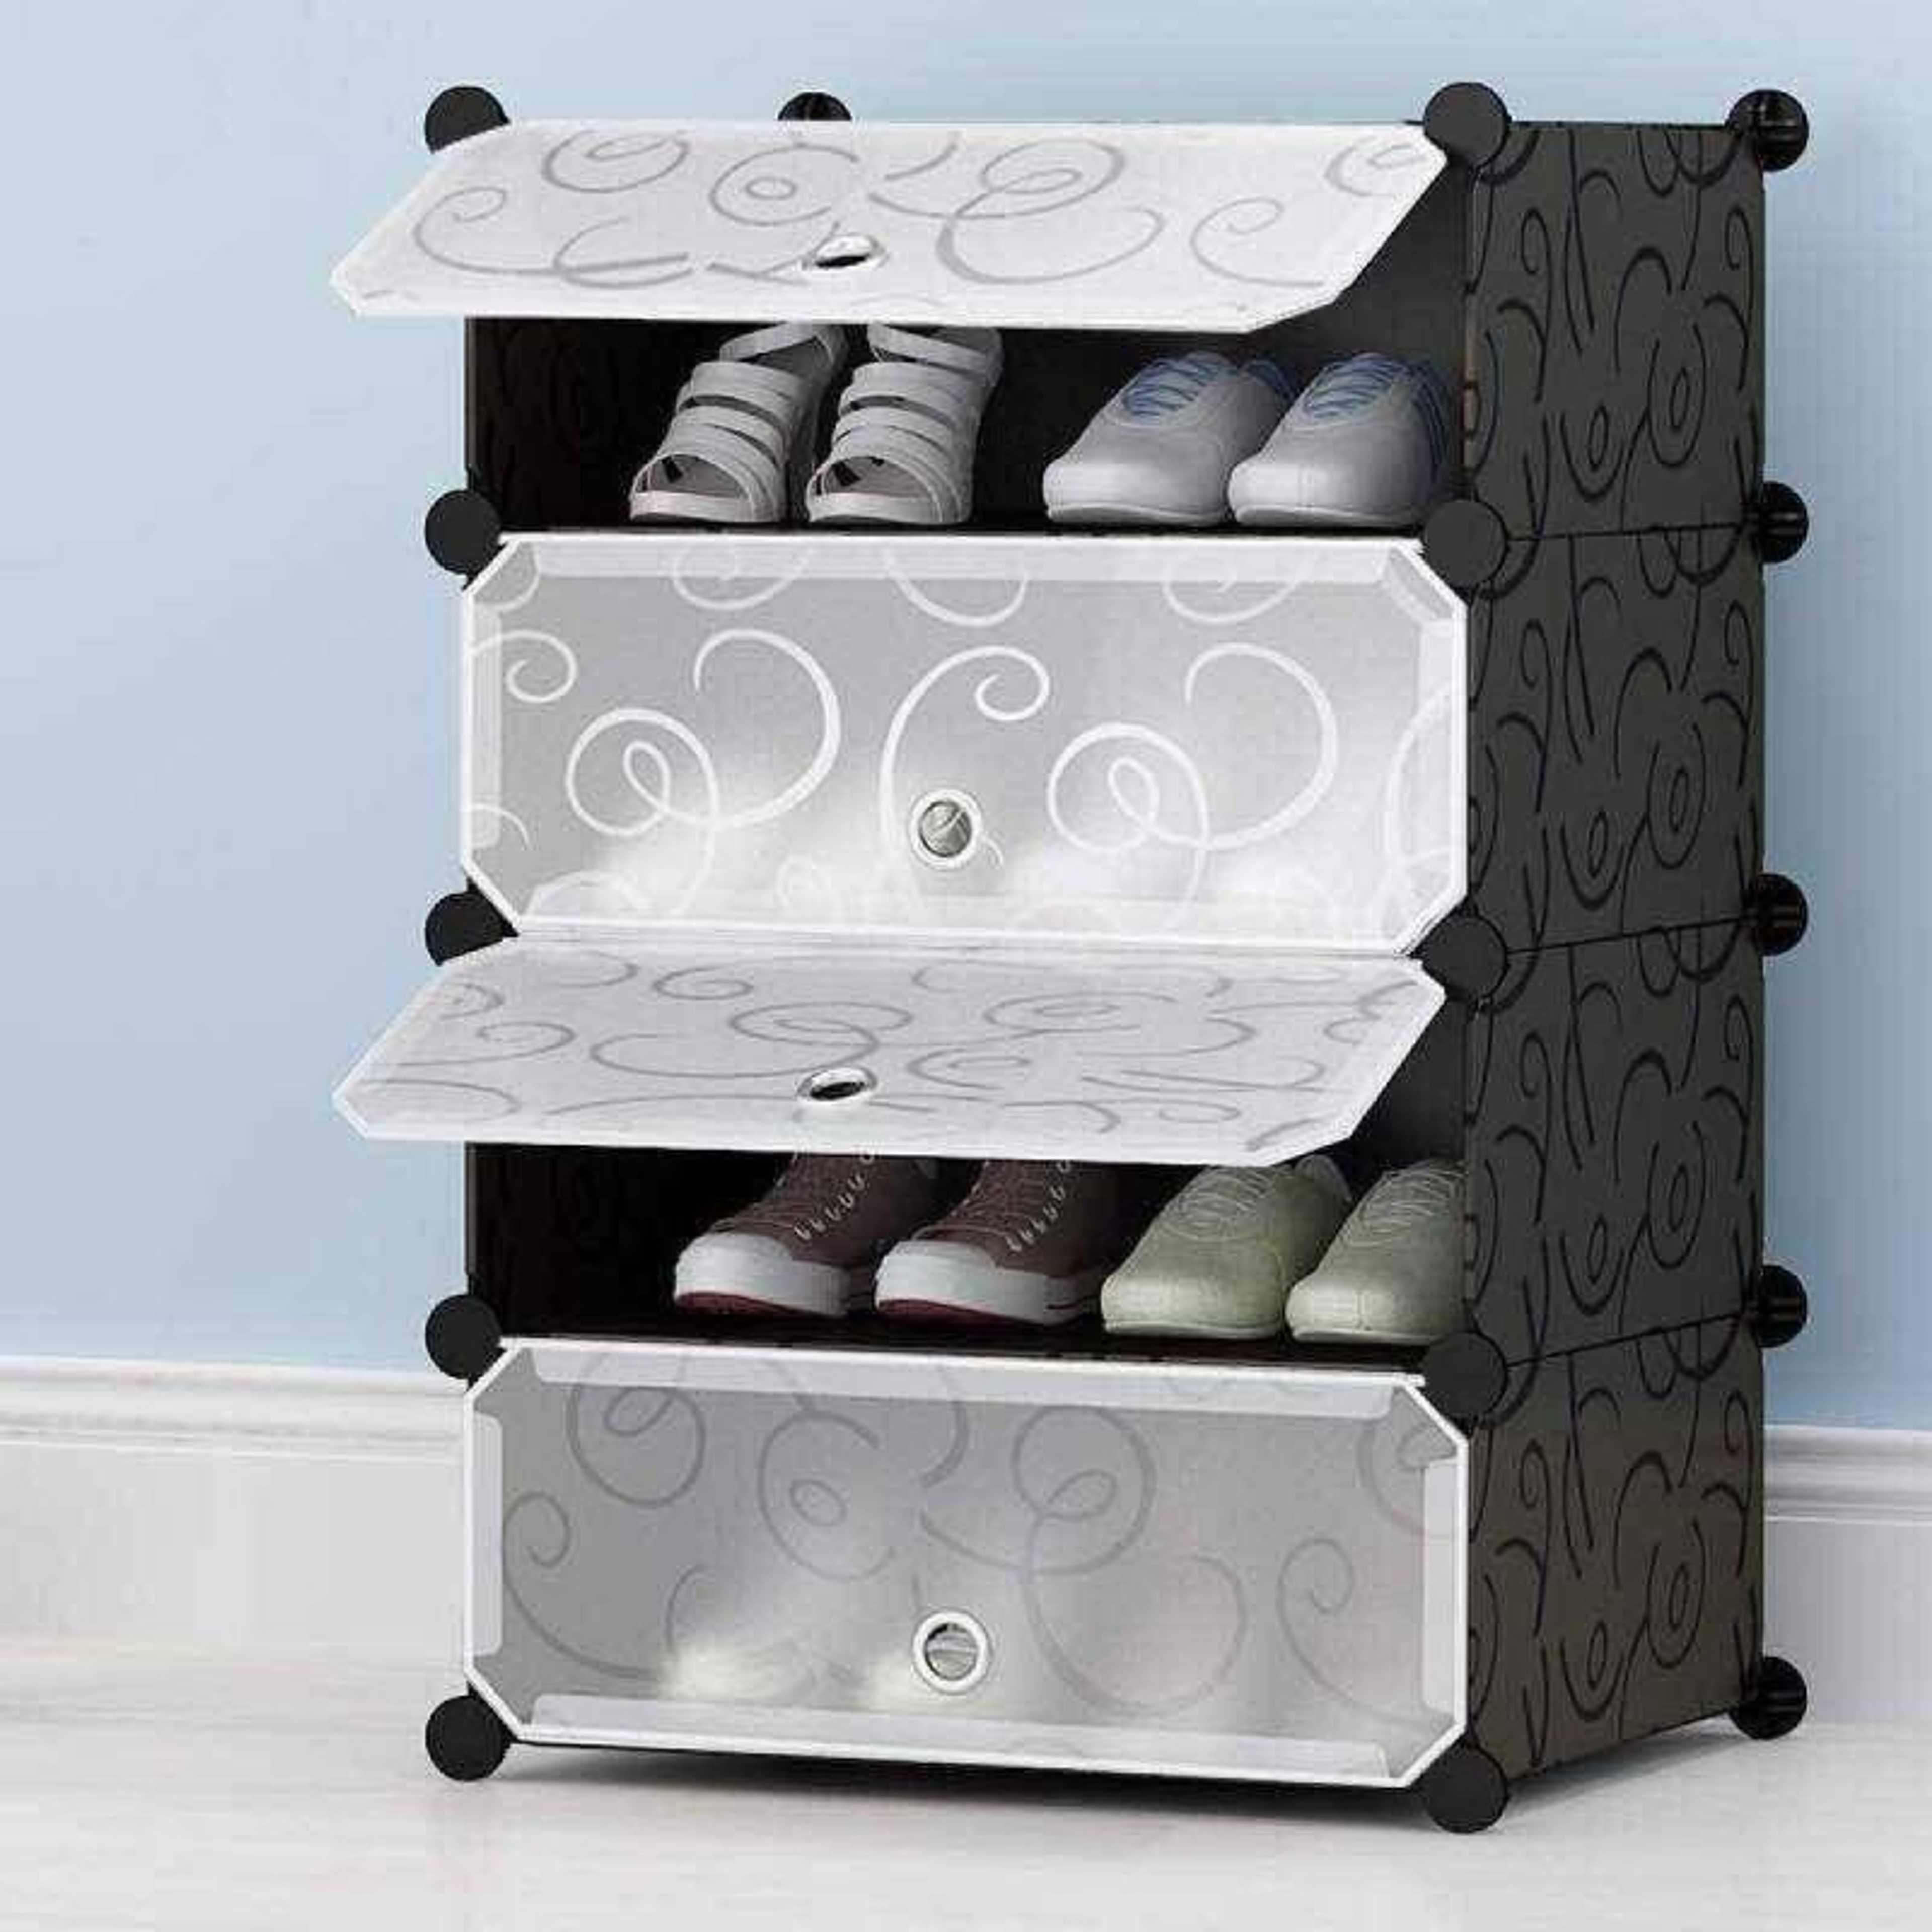 DIY Plastic 4 Layers Cubes Storage Cabinet / Shoe Rack – Black